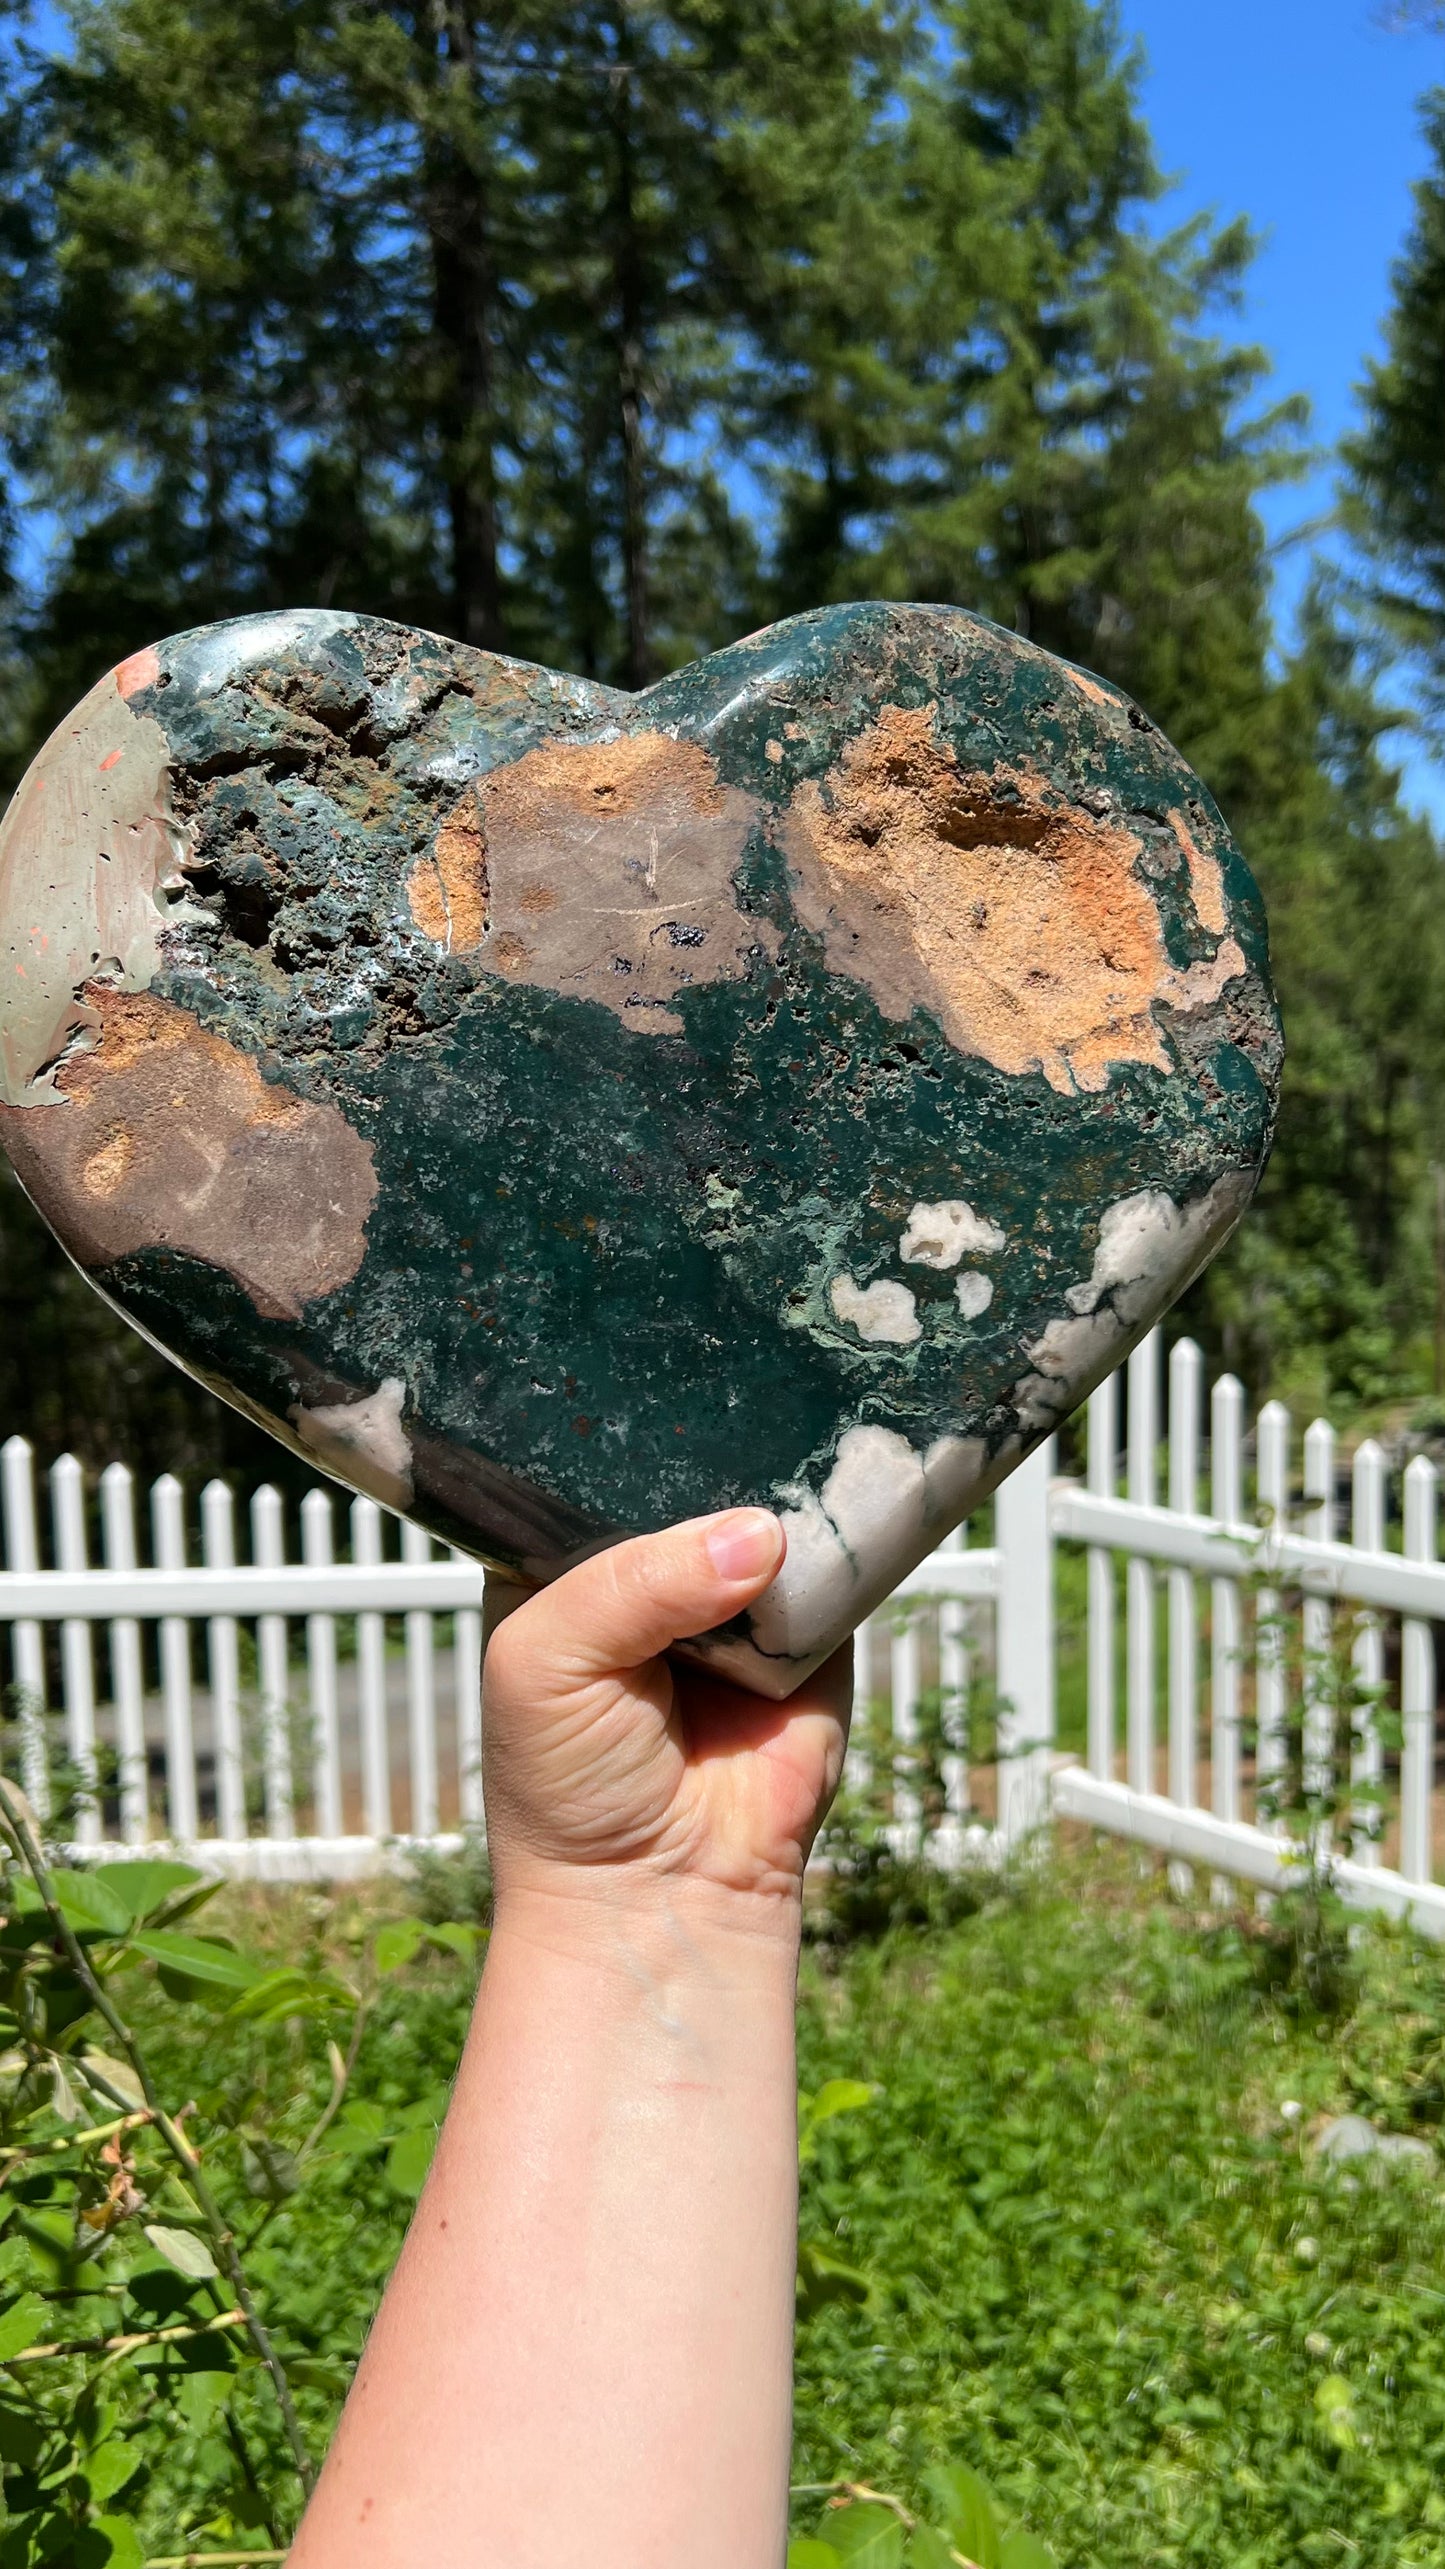 Large Ocean Jasper Heart, Home Decor 12lbs!